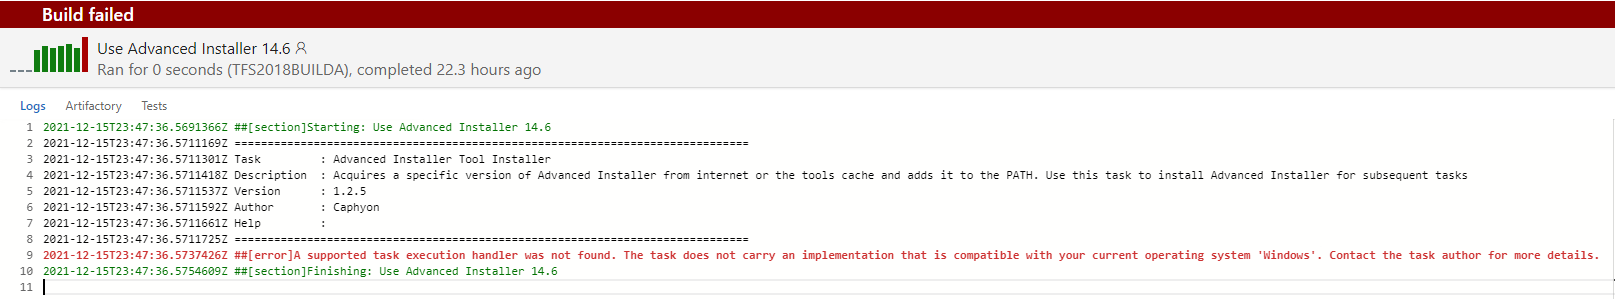 Screenshot from TFS build failure